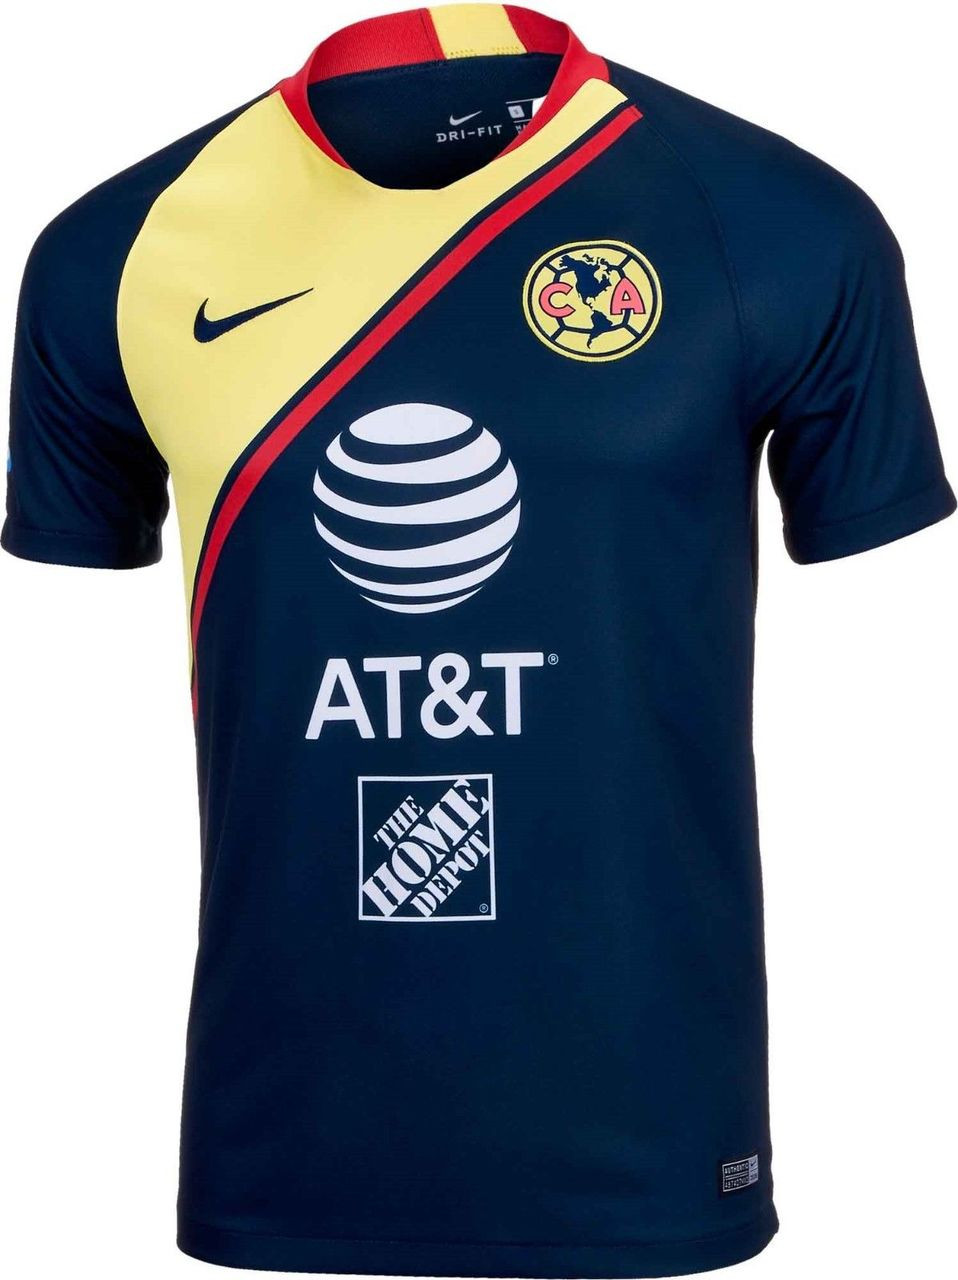 club america 2019 jersey